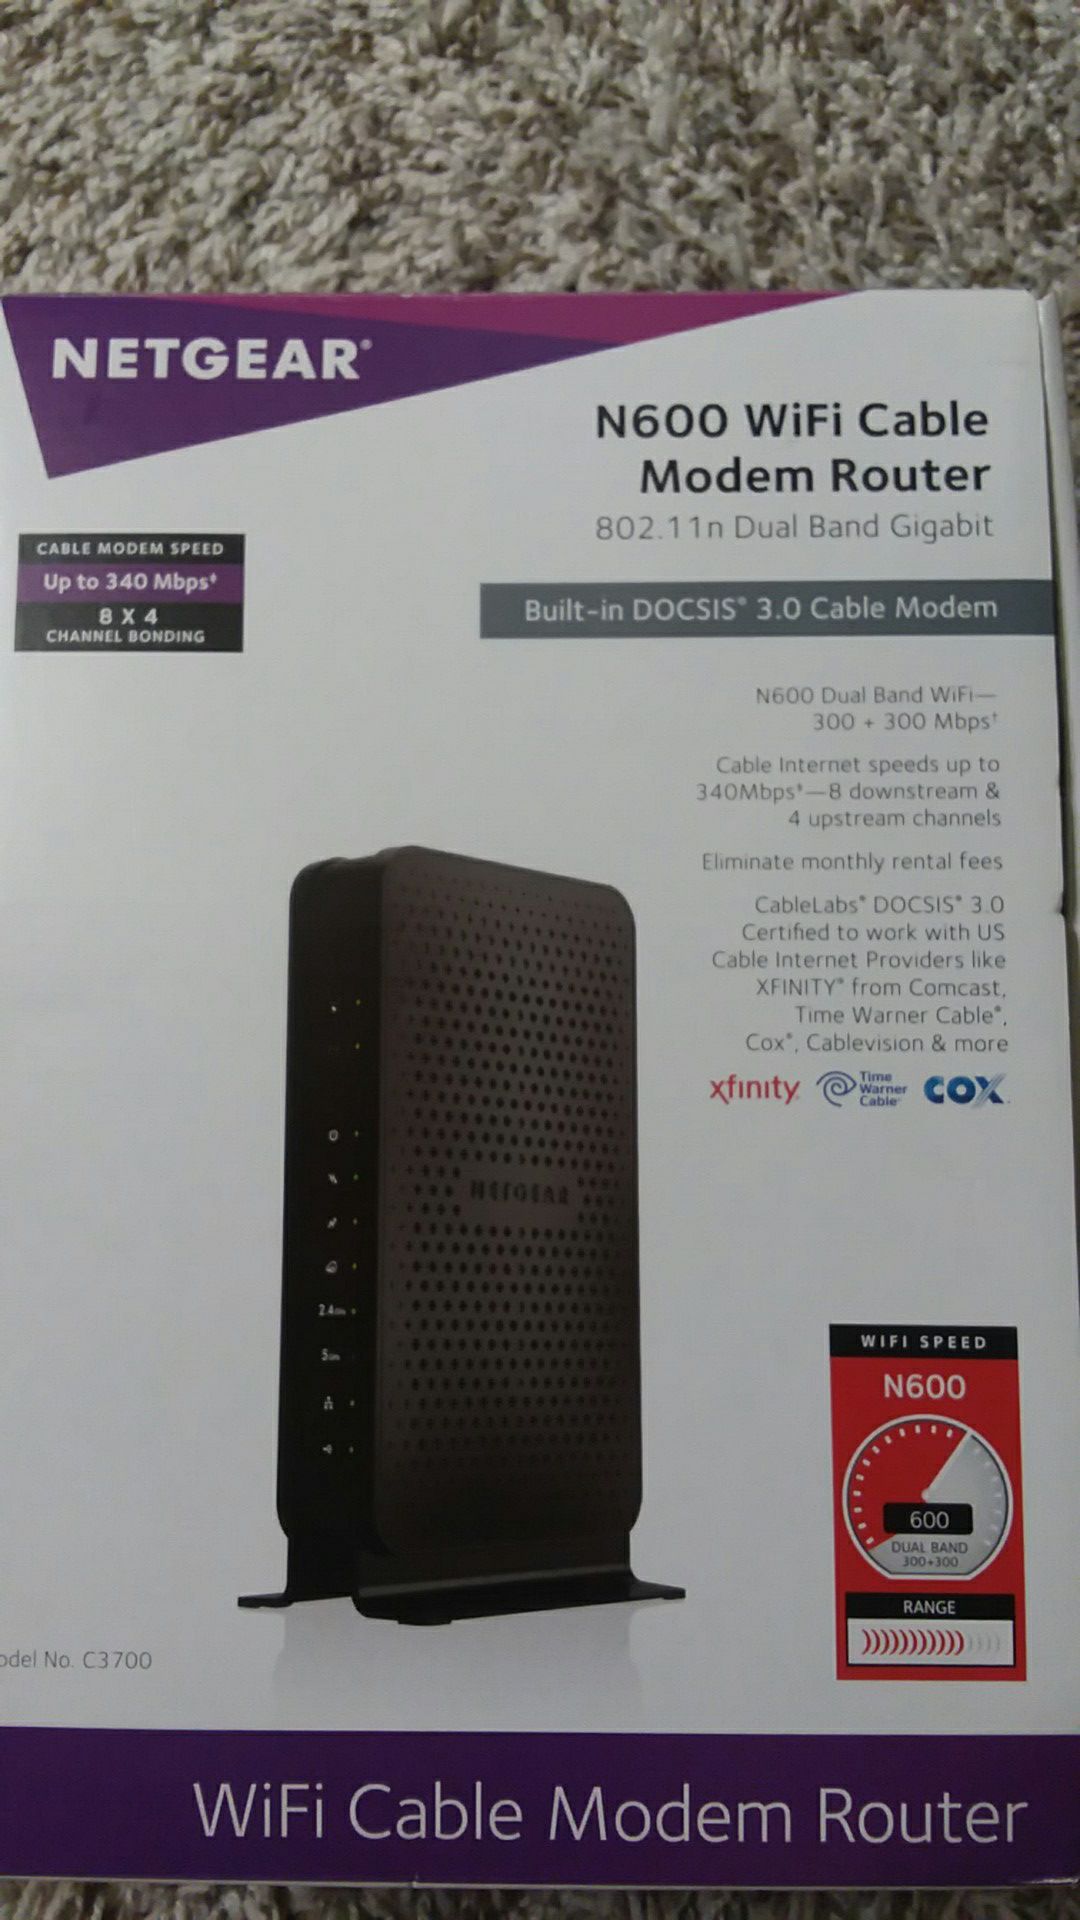 NETGEAR N600 WiFi Cable Modem Router